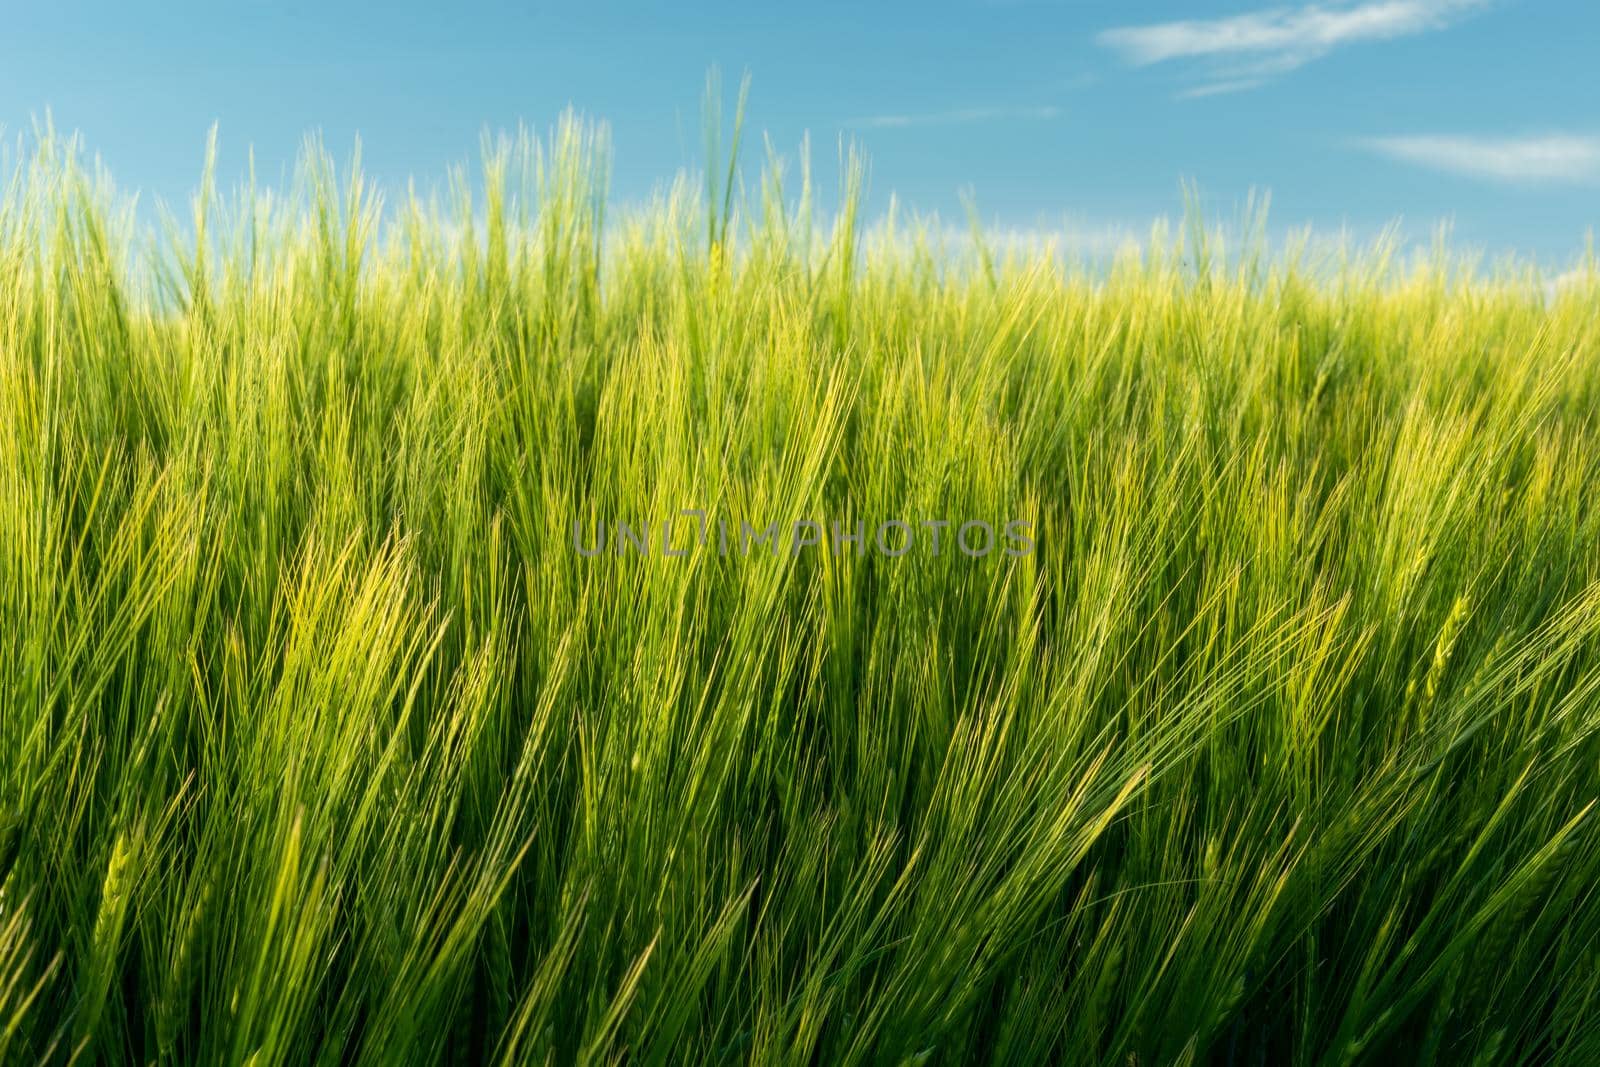 Yellow-green barley grain ears and blue sky by darekb22